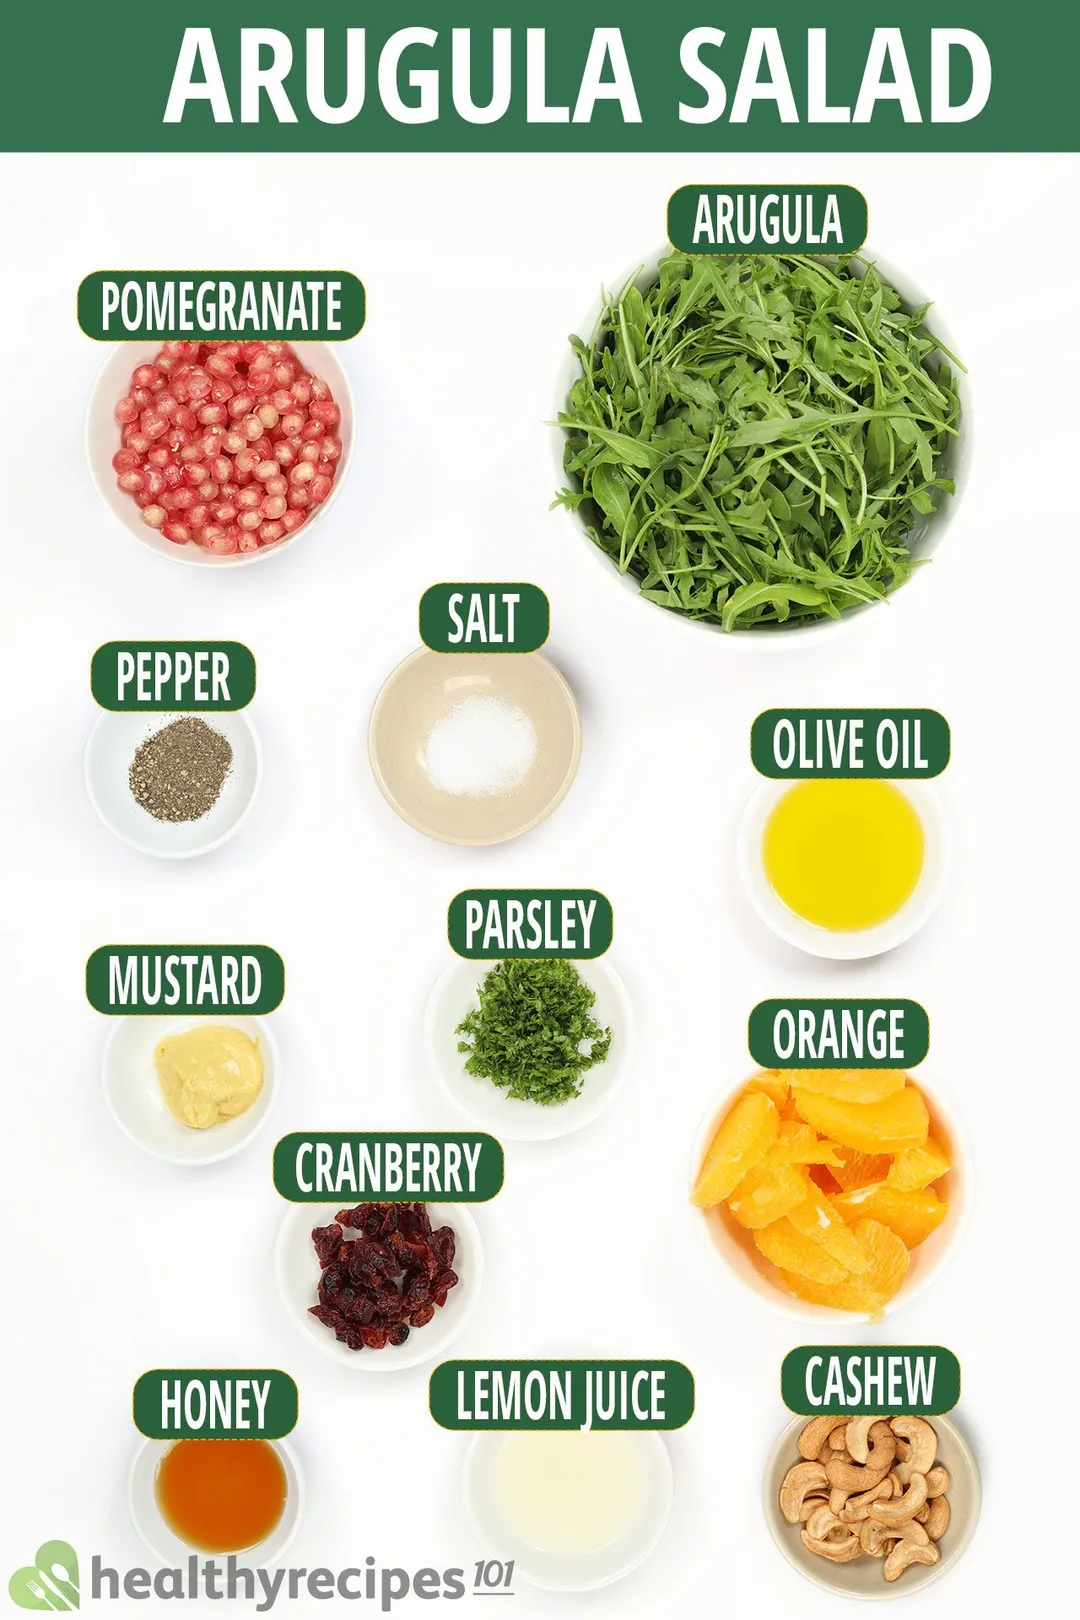 Ingredients for Arugula Salad, including a bowl of fresh Arugula, pomegranate seeds, orange segments, and other ingredients.